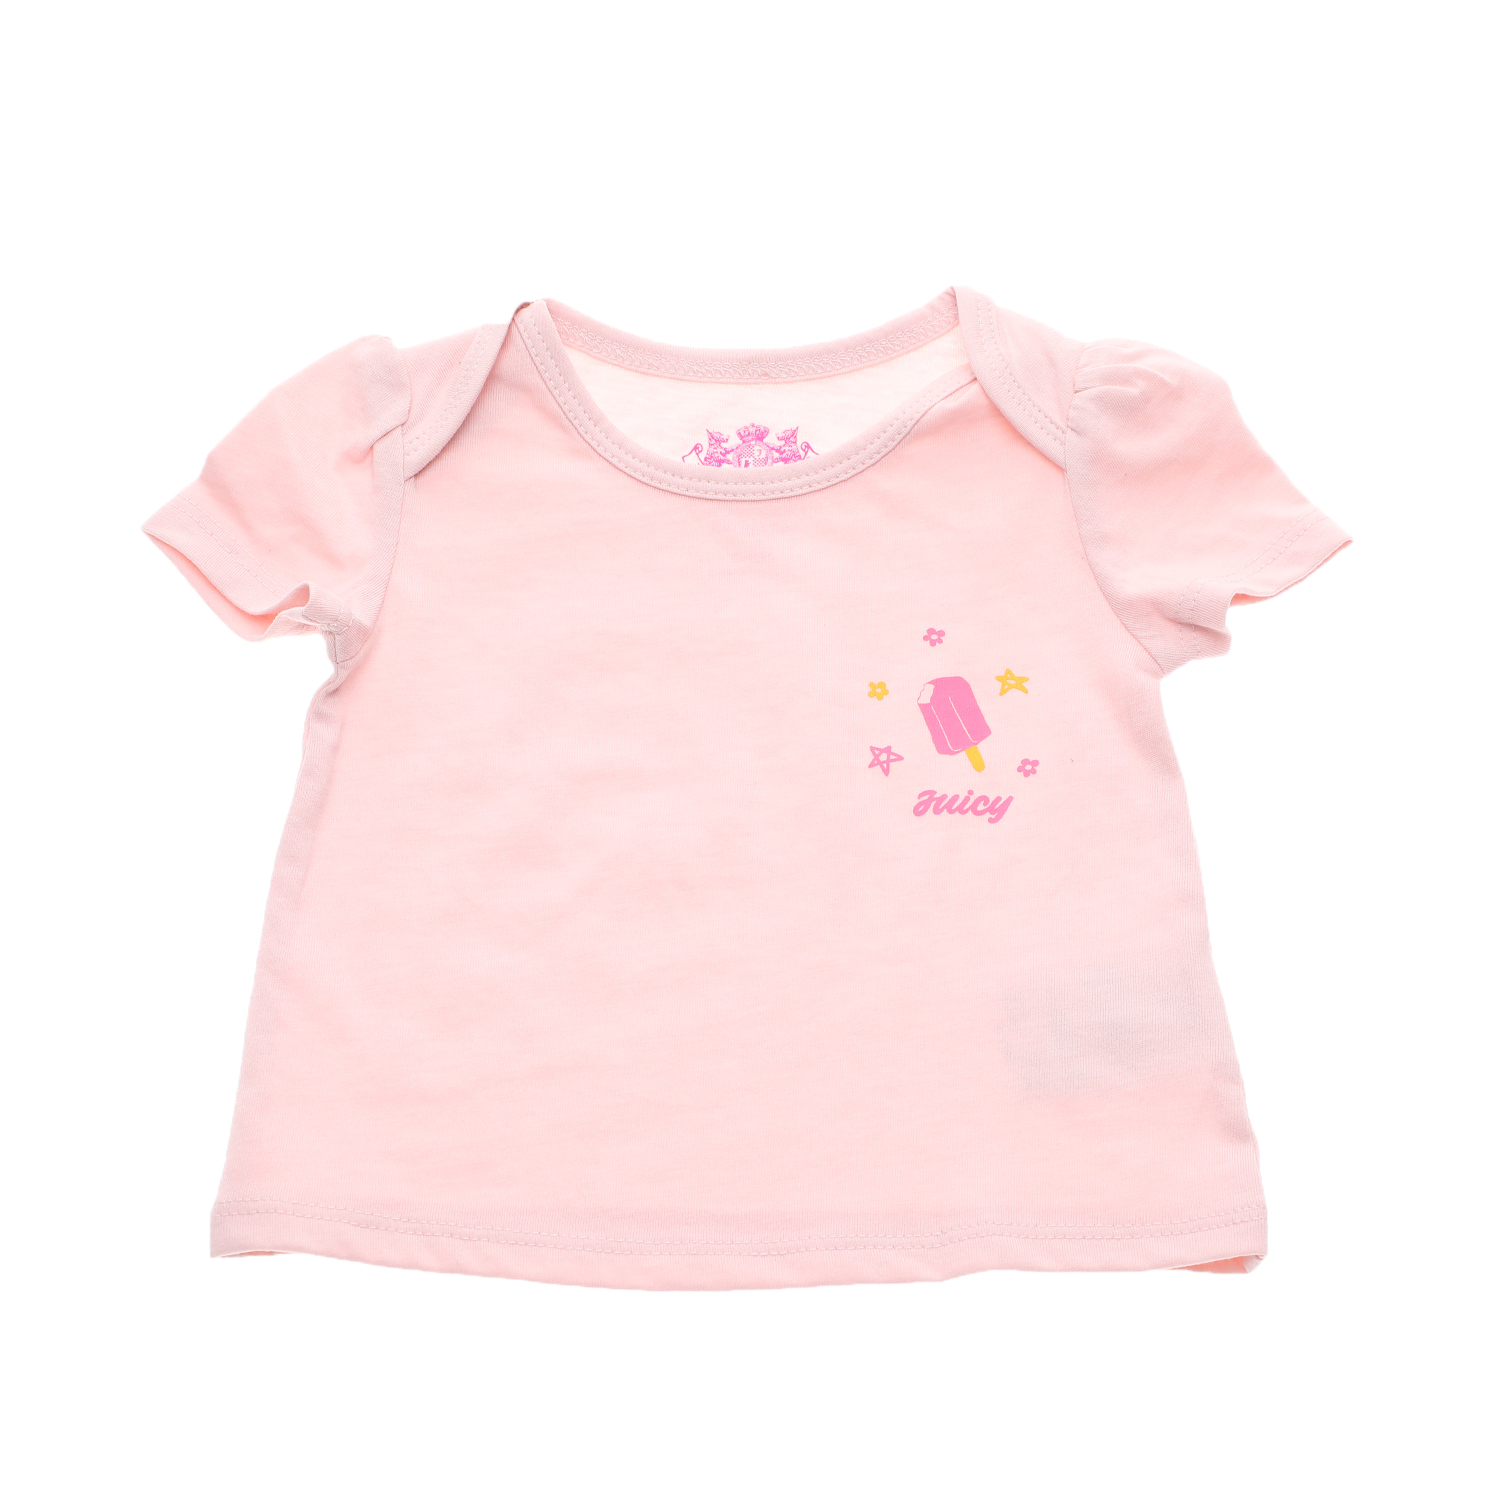 JUICY COUTURE KIDS - Βρεφική μπλούζα JUICY COUTURE KIDS PARADISE ροζ Παιδικά/Baby/Ρούχα/Μπλούζες